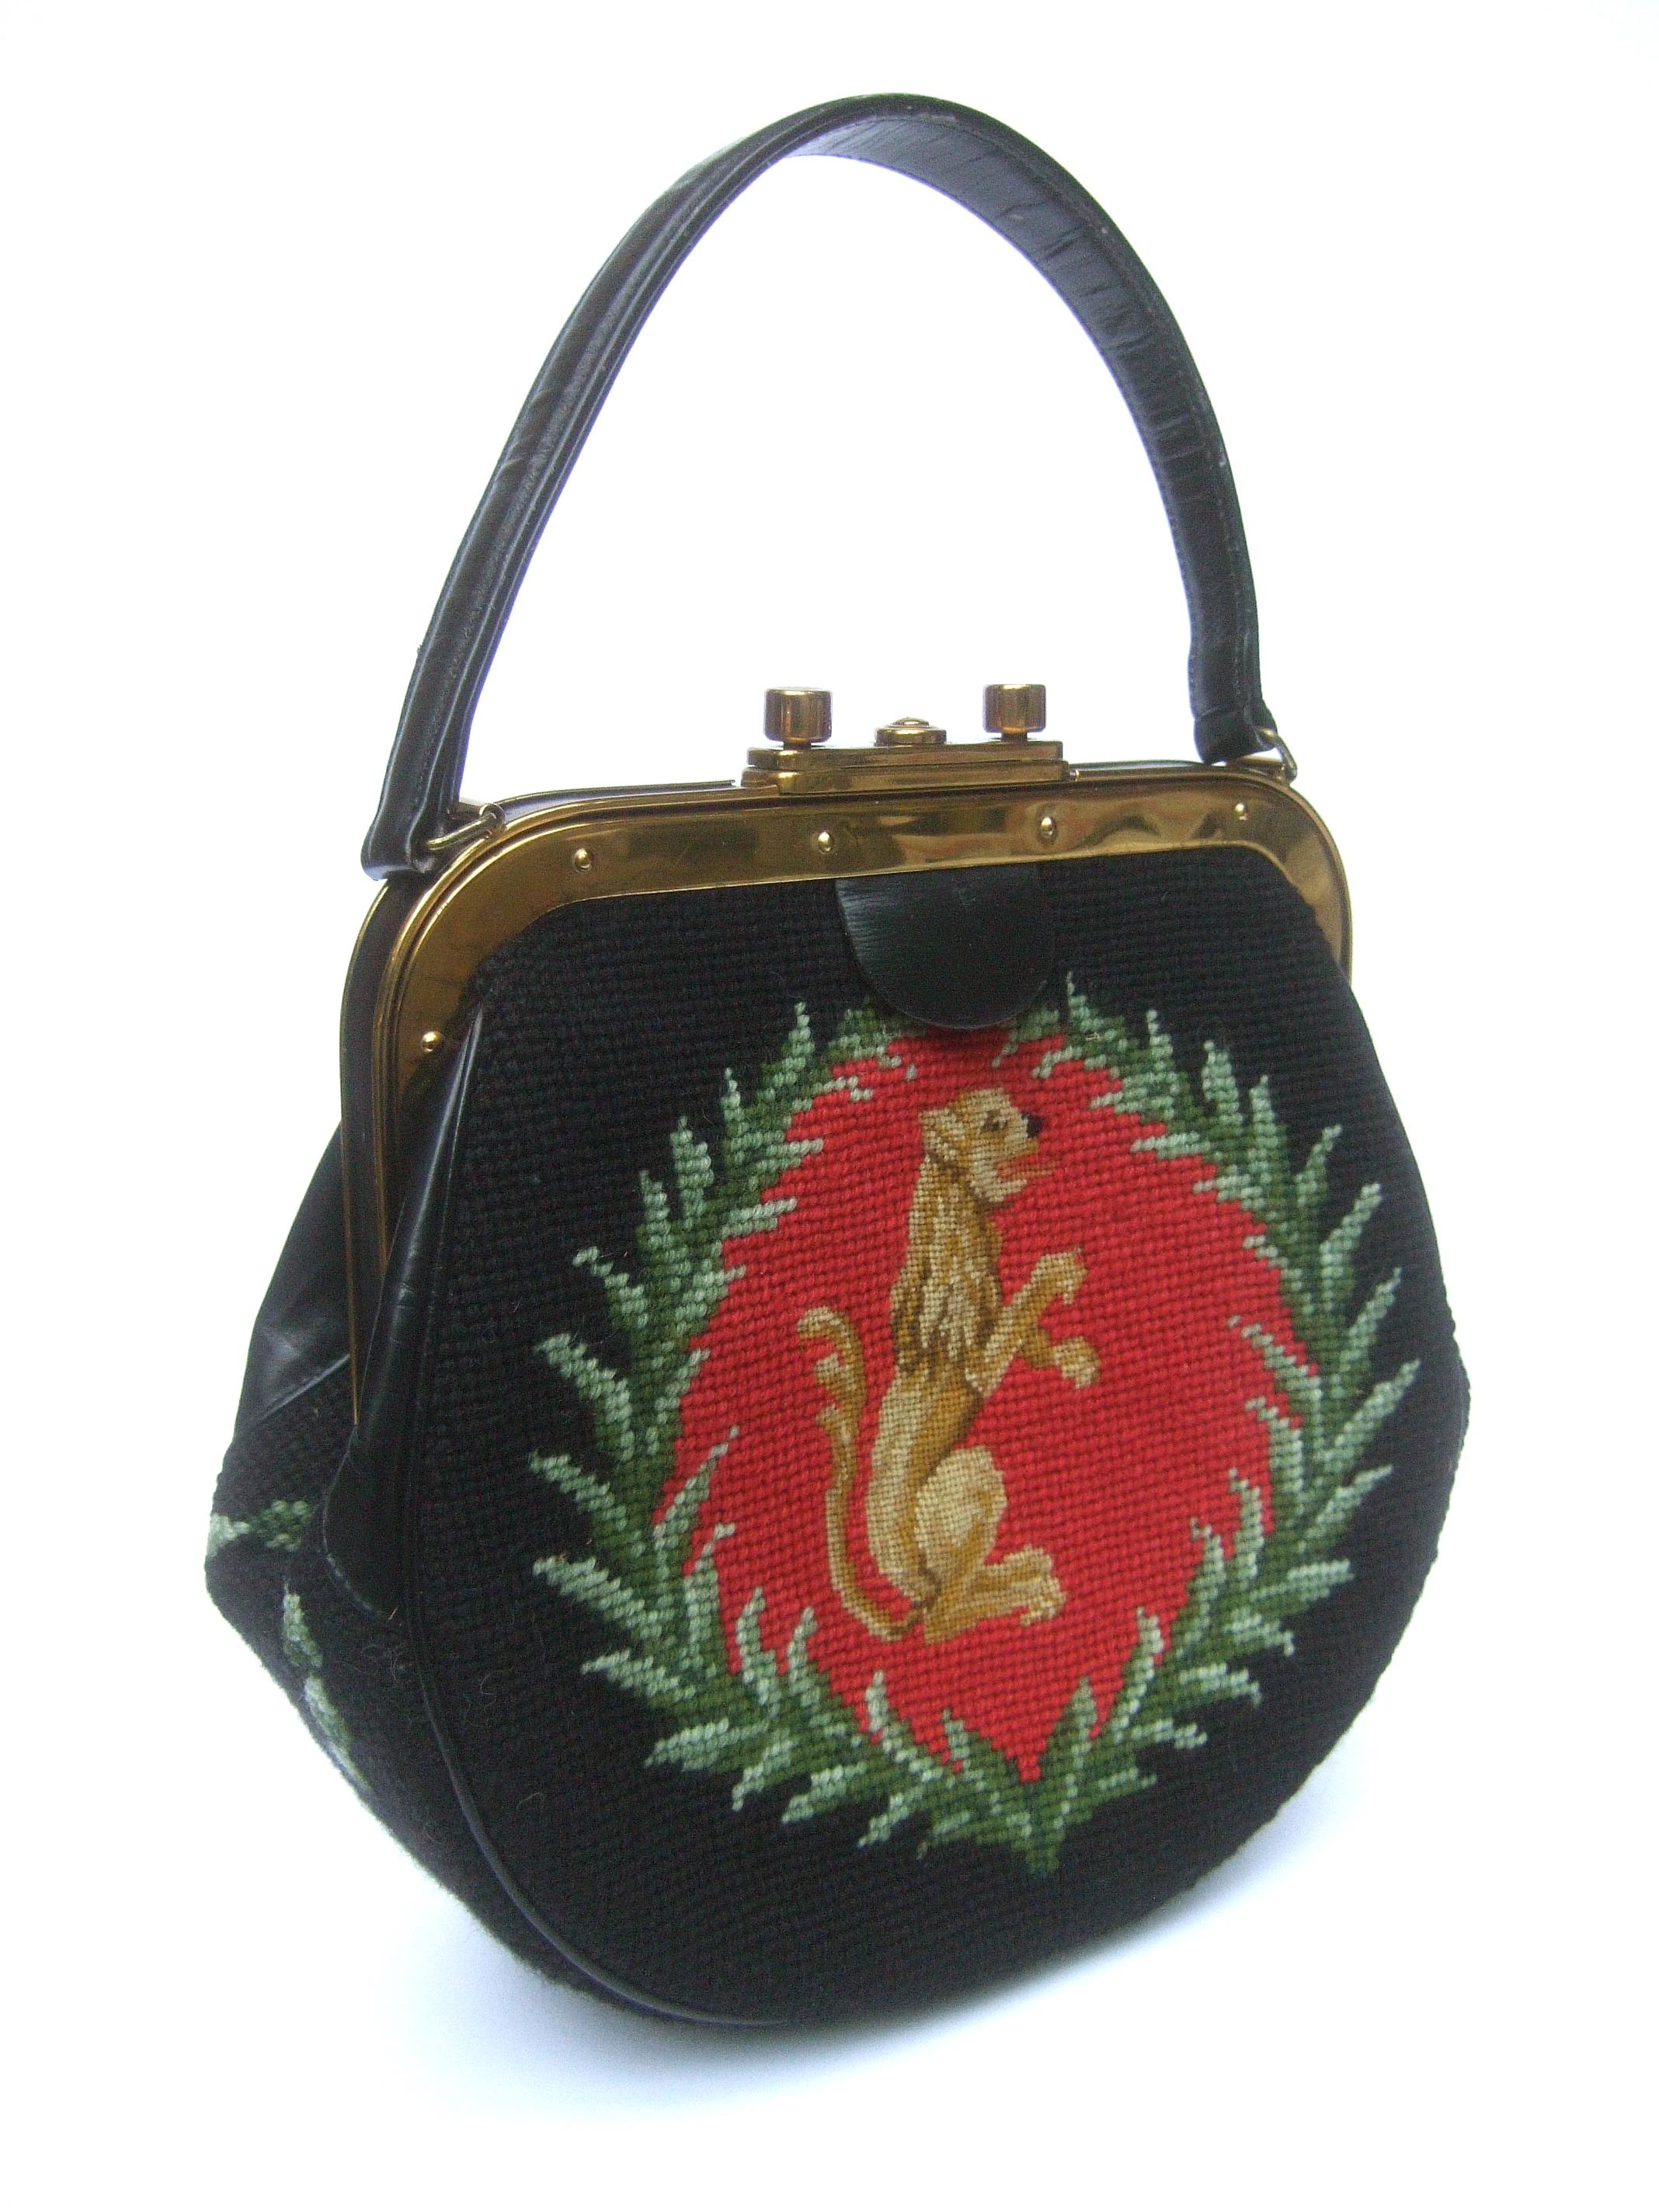 Needlepoint Artisan Griffin & Laurels Hand Stitched Handbag c 1970 For Sale 2